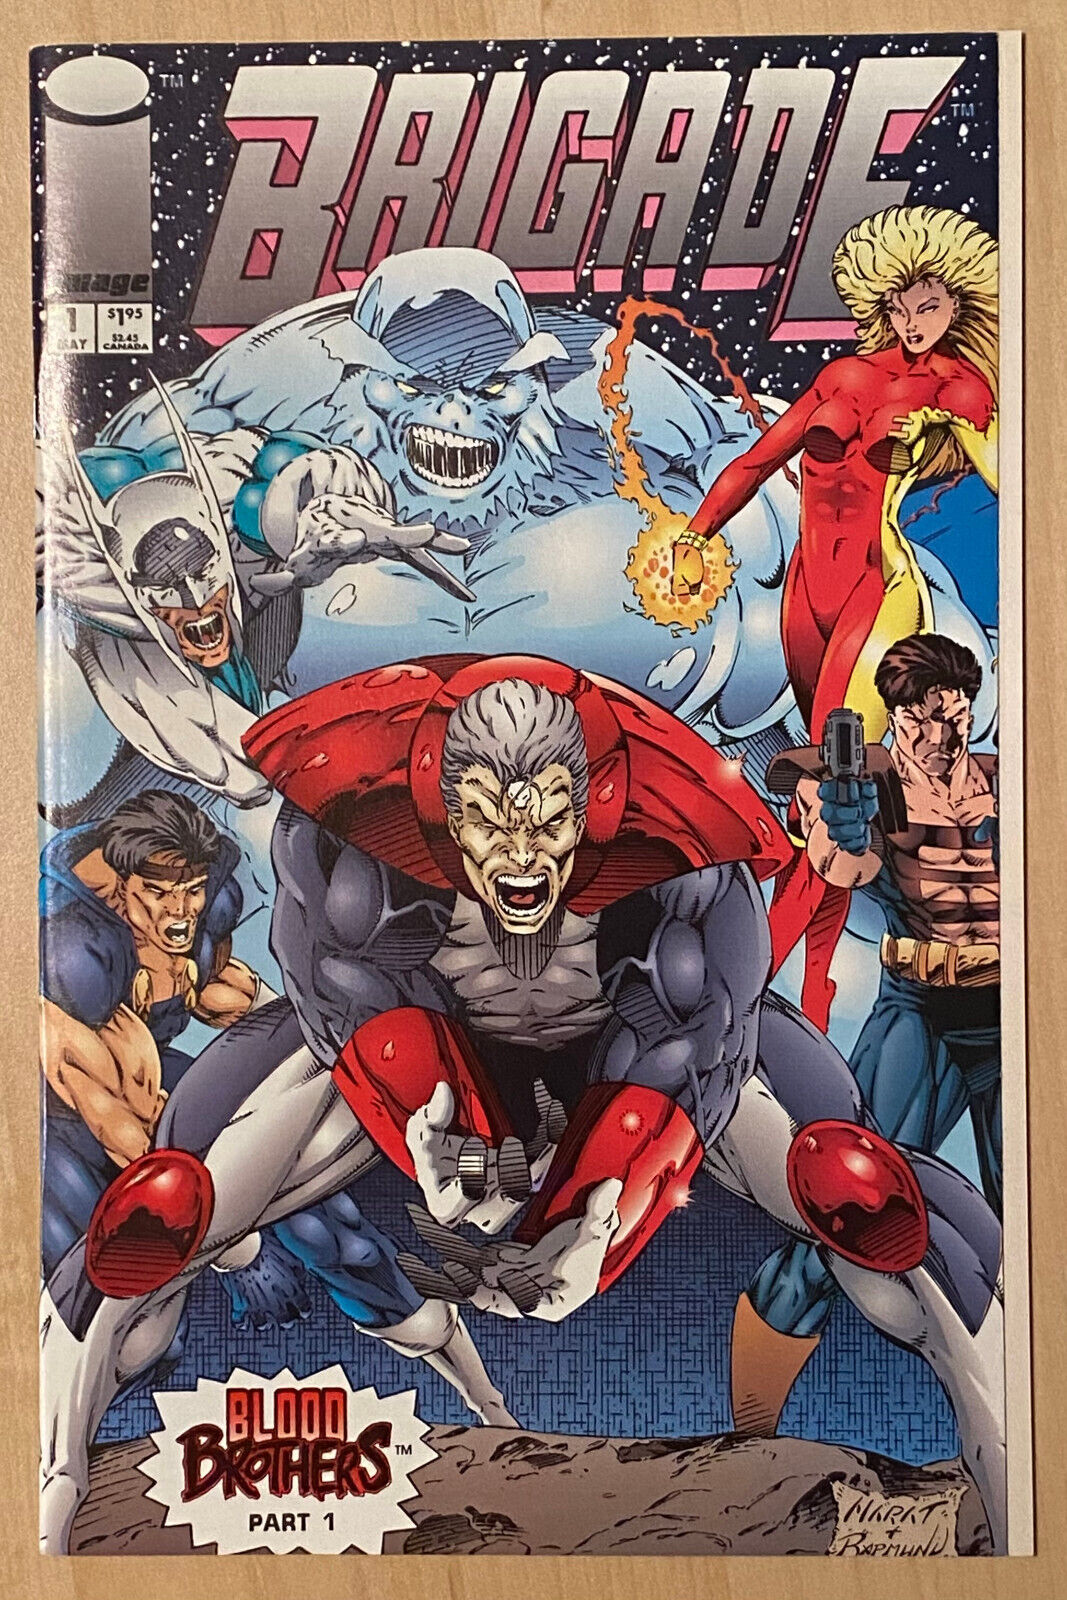 Brigade #1 (Blood Brothers Part 1) Image Comics 1993 Comic Book